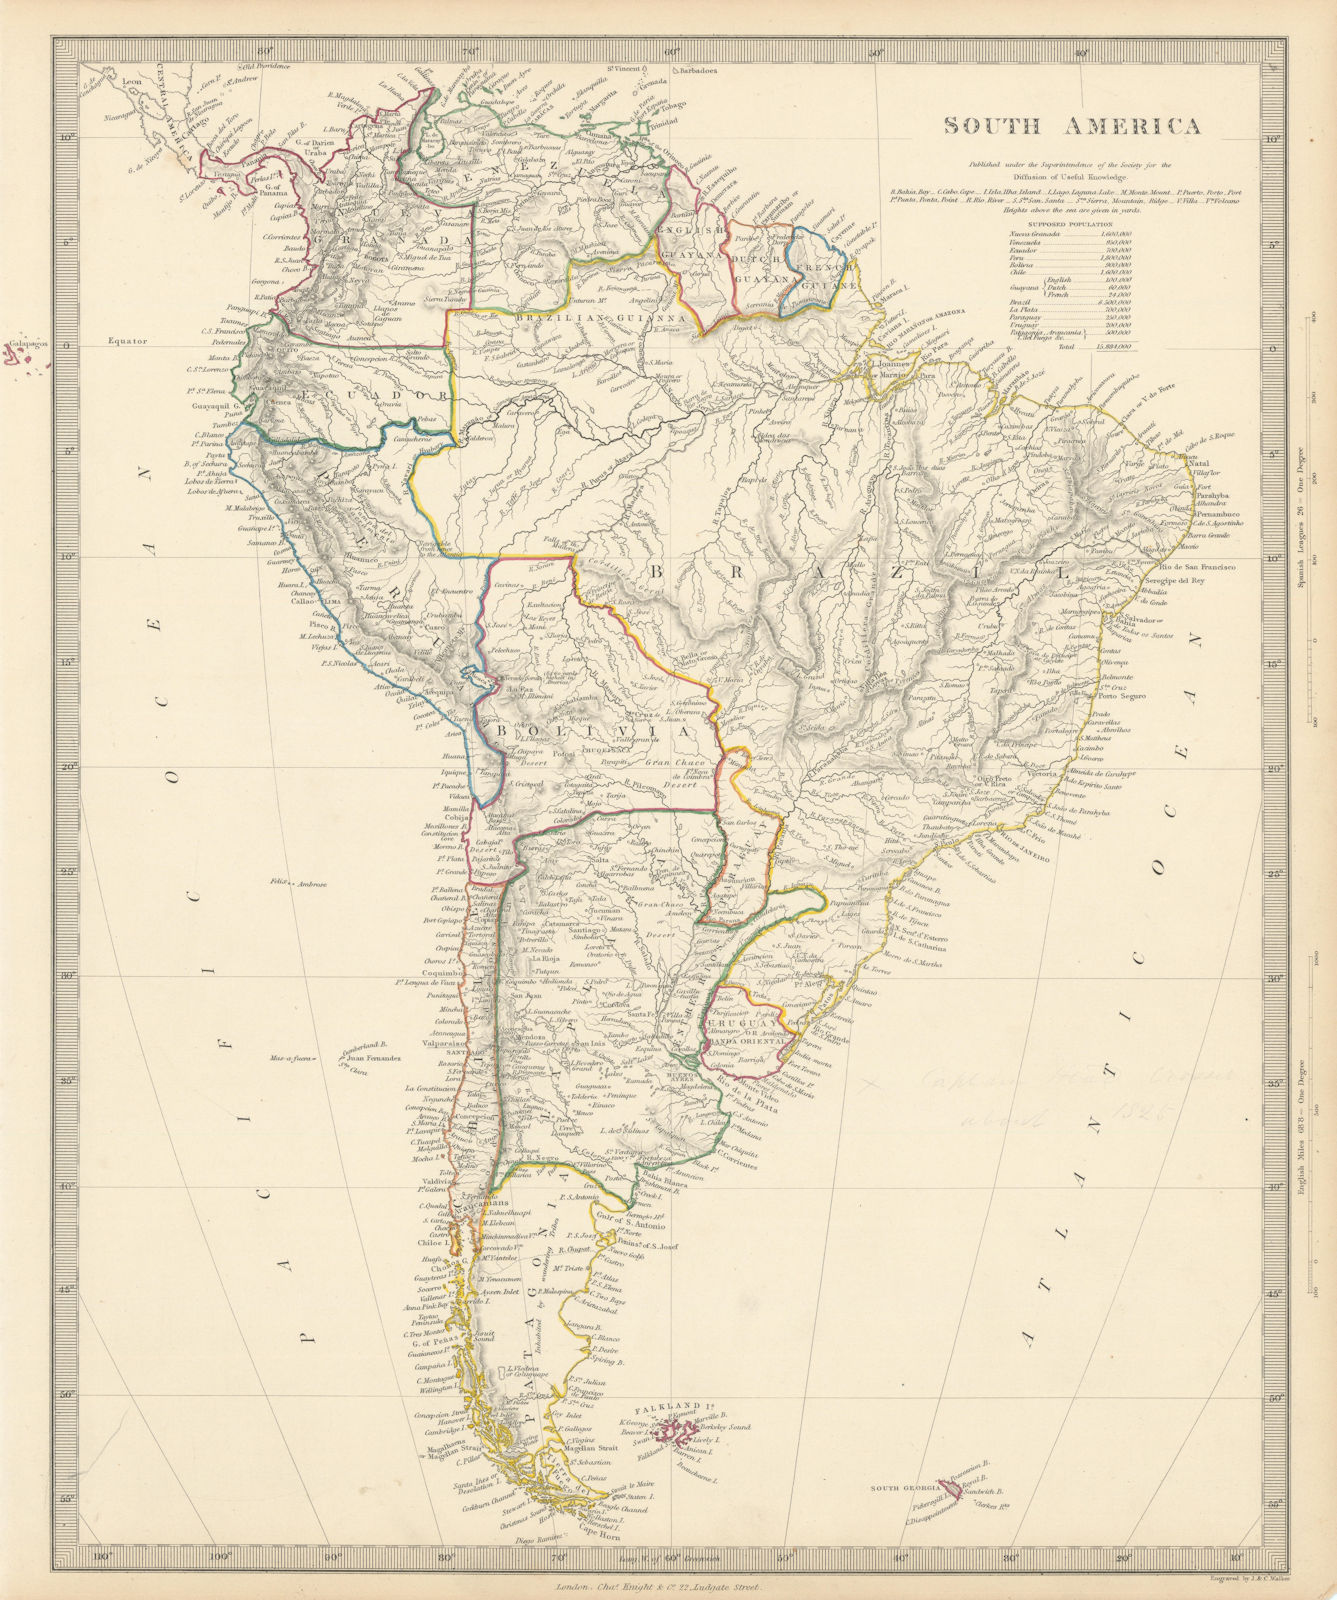 SOUTH AMERICA. Brazil Chile Peru Bolivia Patagonia La Plata. SDUK 1844 old map